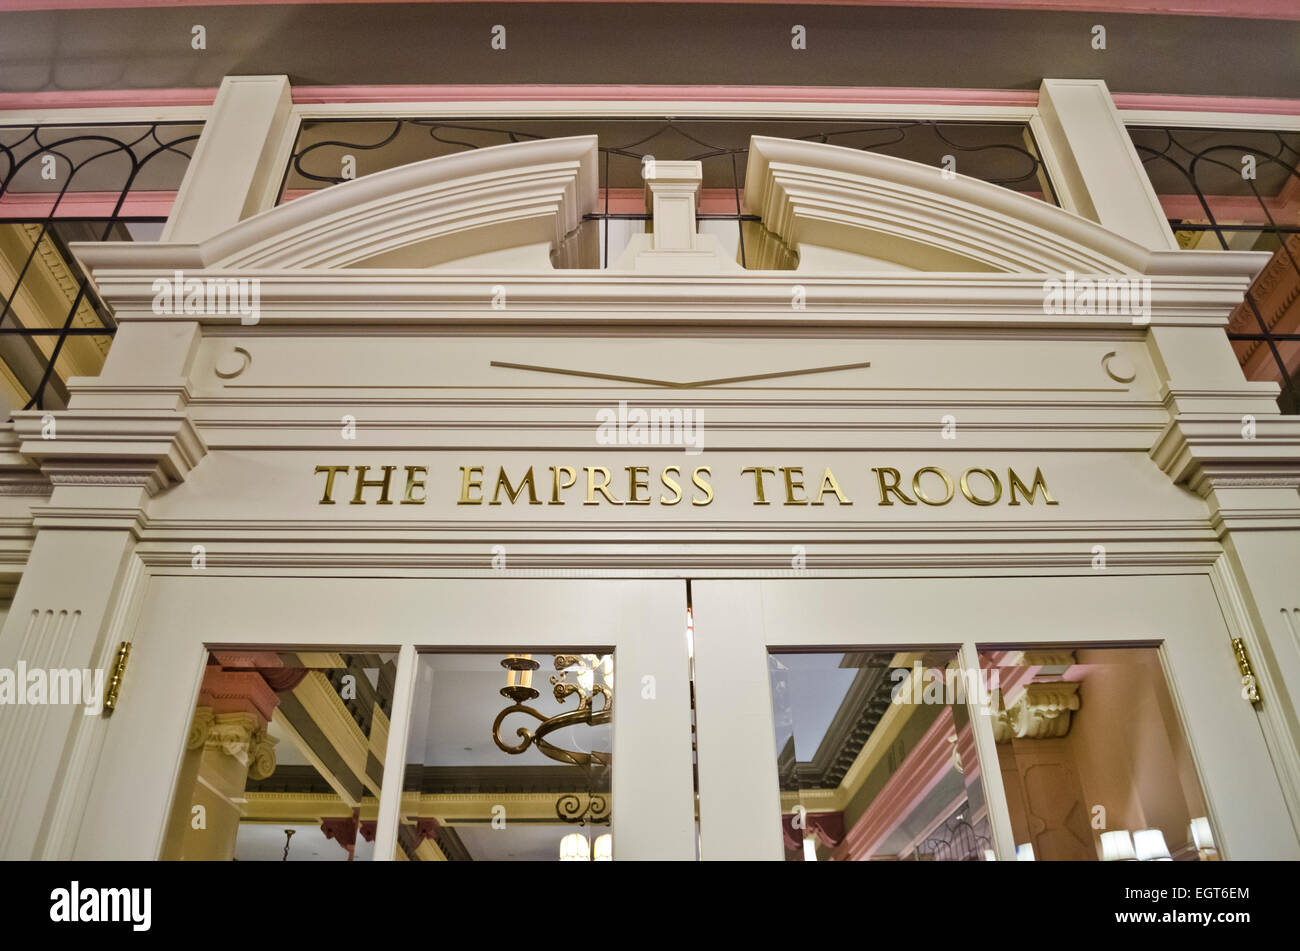 Tea Room At The Empress Hotel Stockfotos Tea Room At The